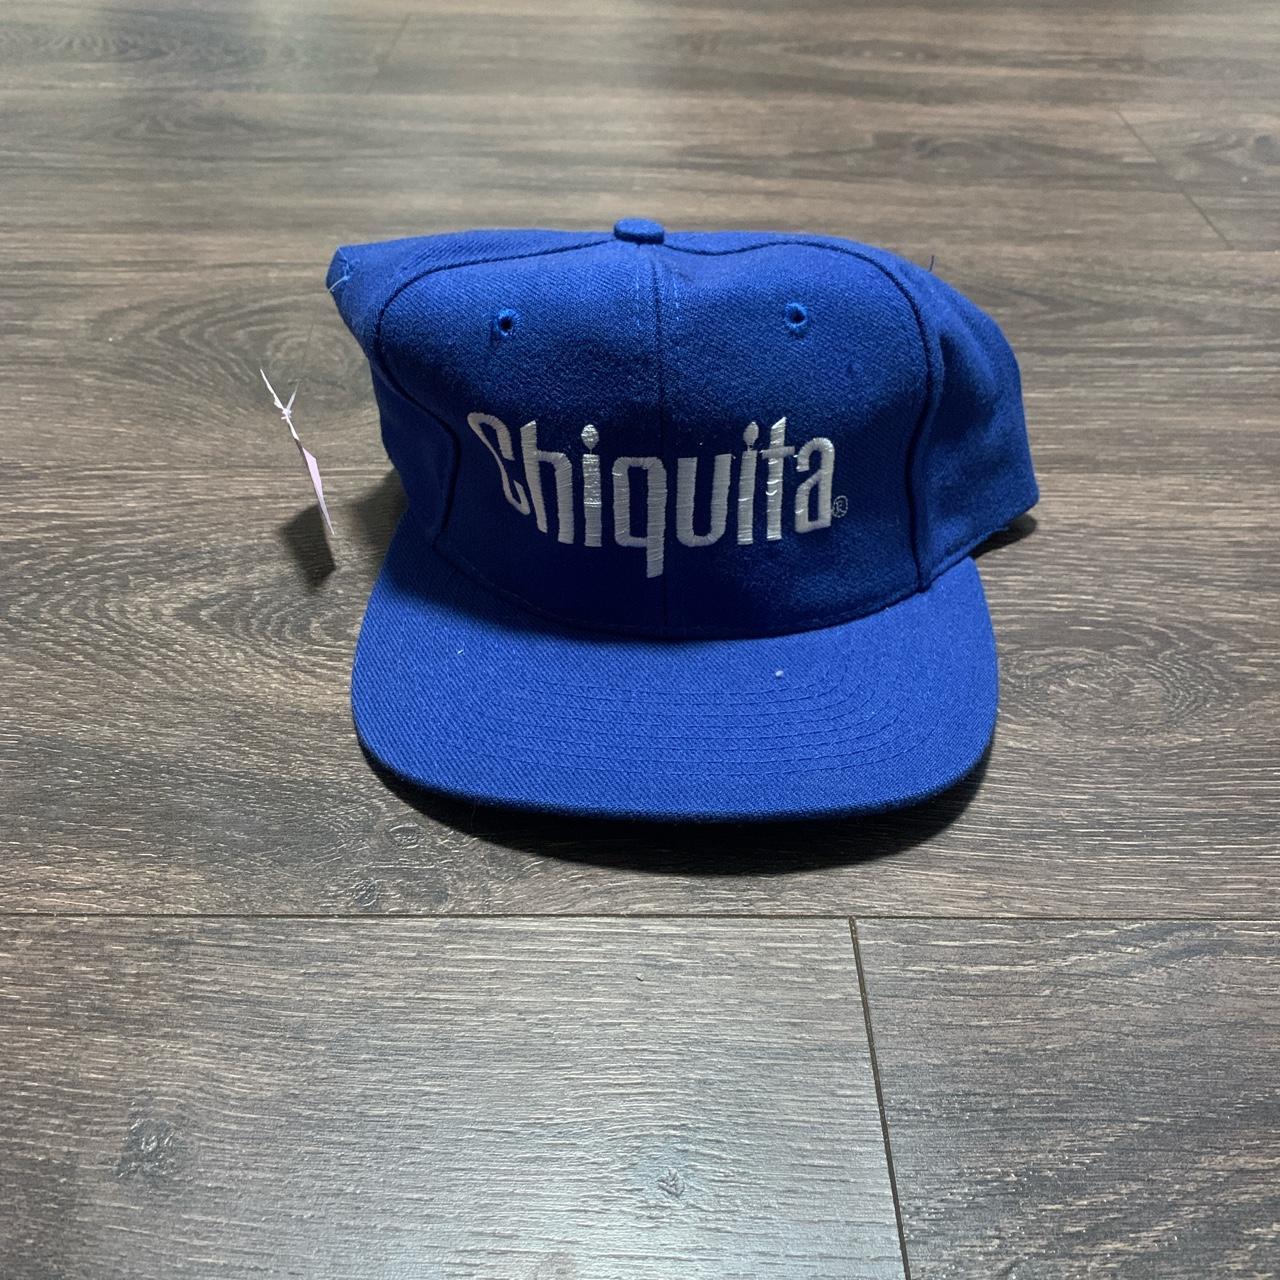 Chiquita Banana Mens Trucker Hat Blue Snapback Retro - Depop